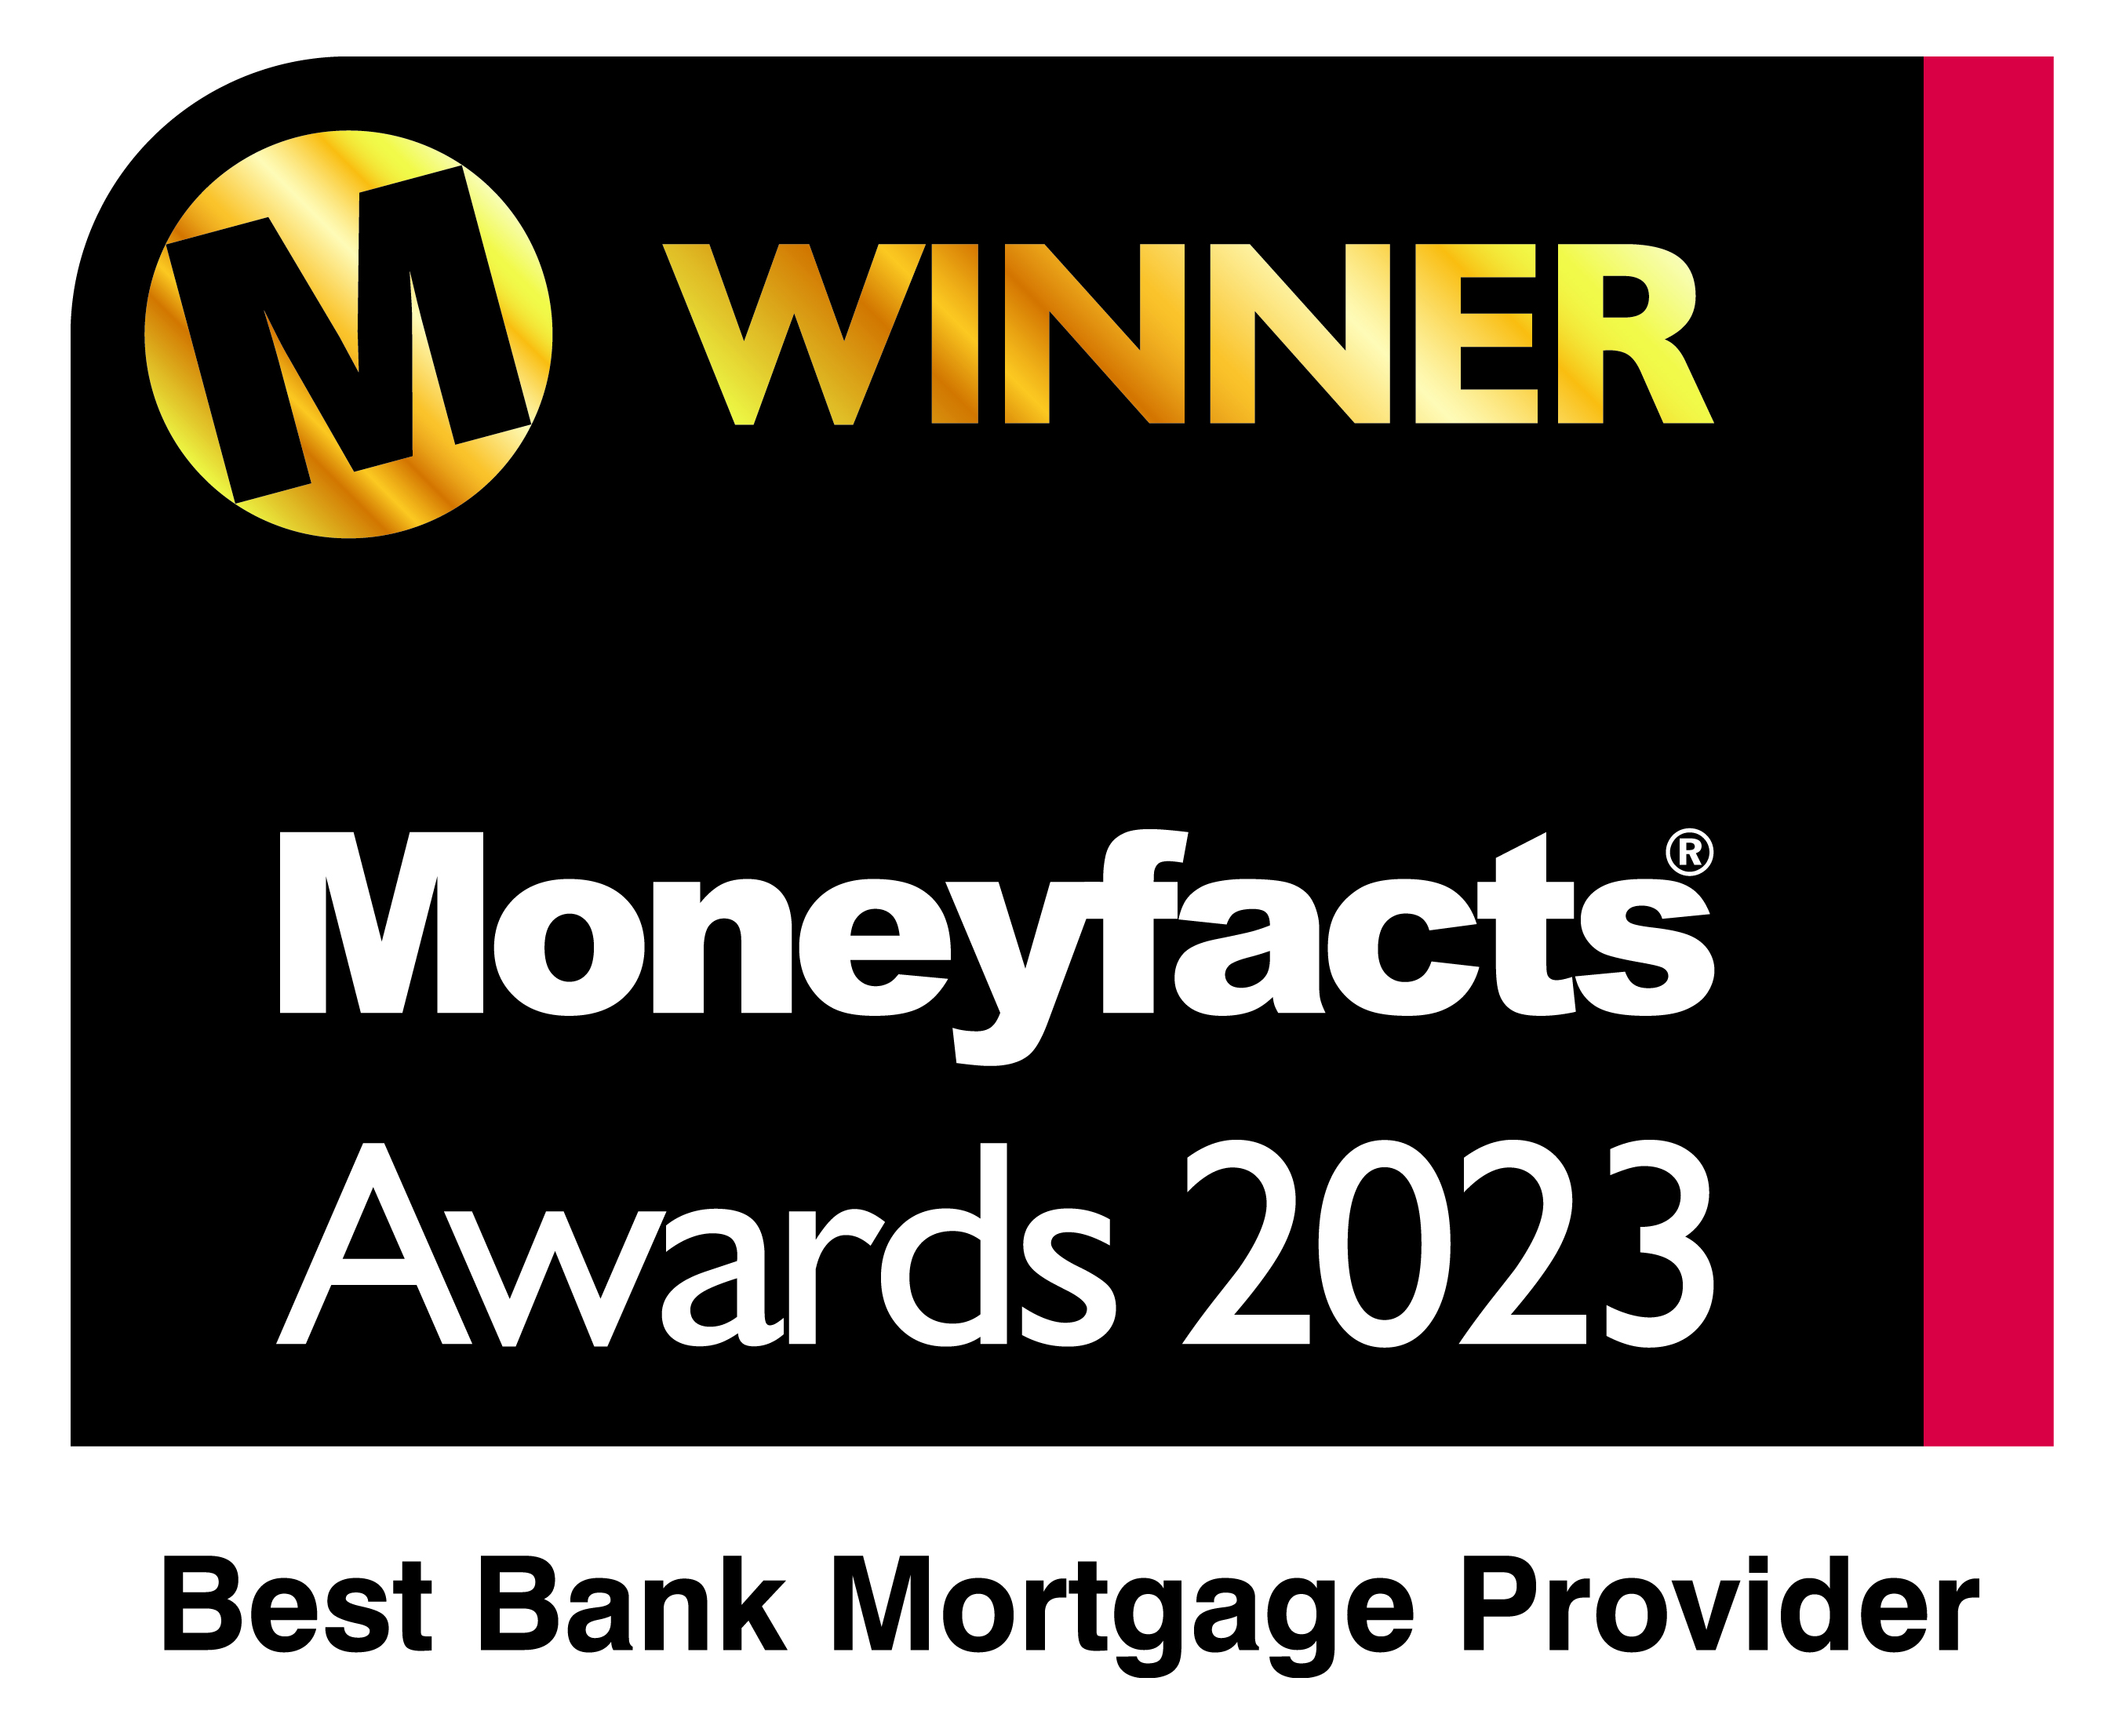 Moneyfacts winner awards 2023 - best bank mortgage provider